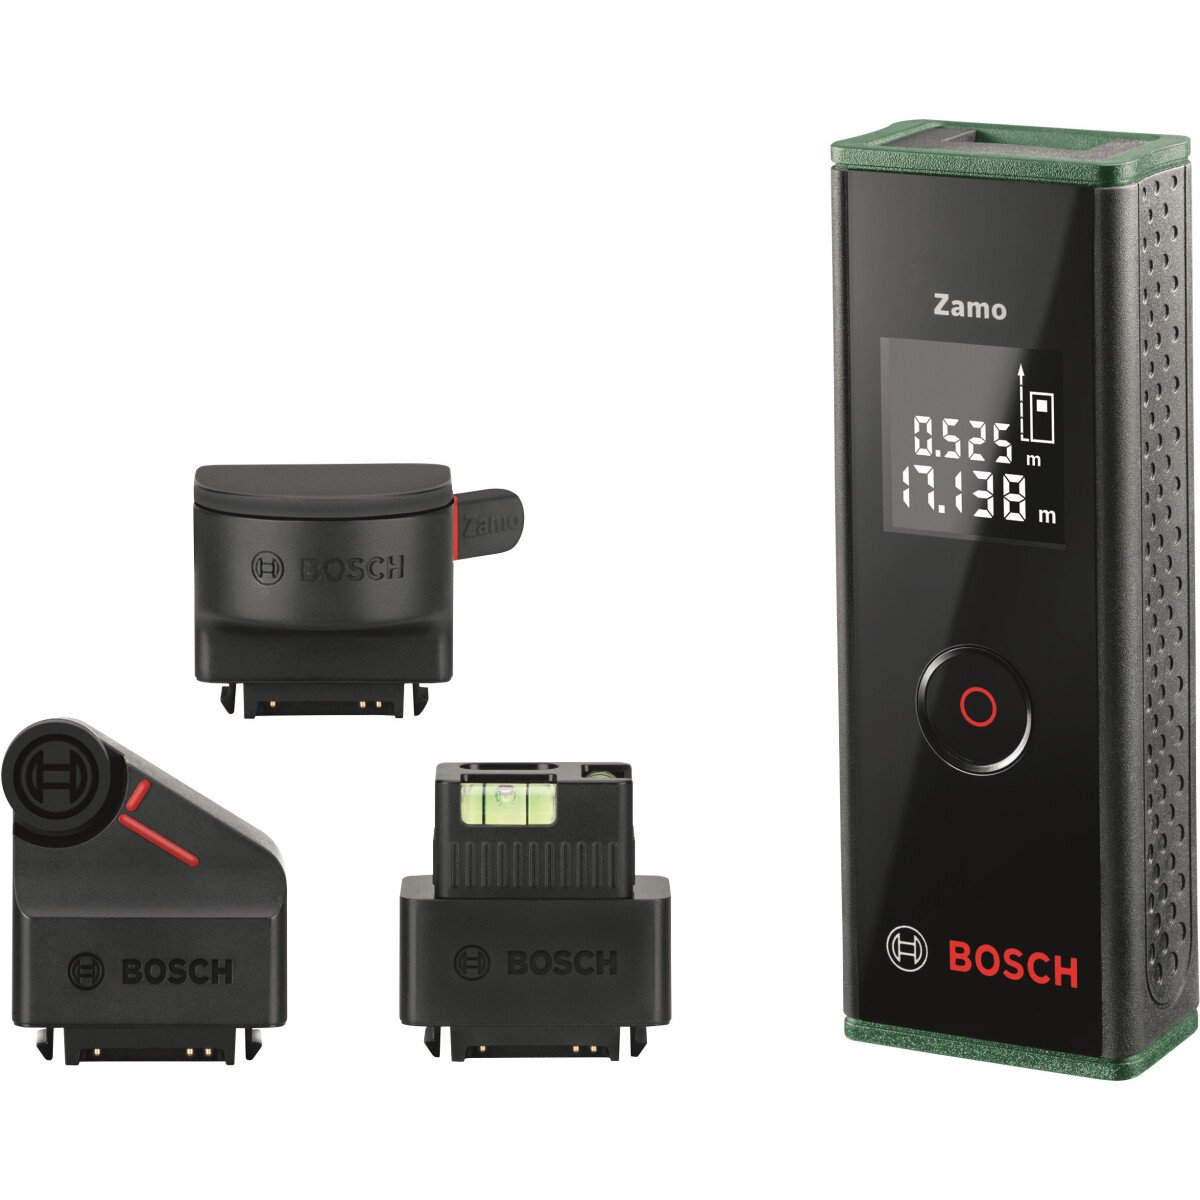 Bosch ZAMO3 SET Zamo Laser Measure 20m with 3 Adaptors